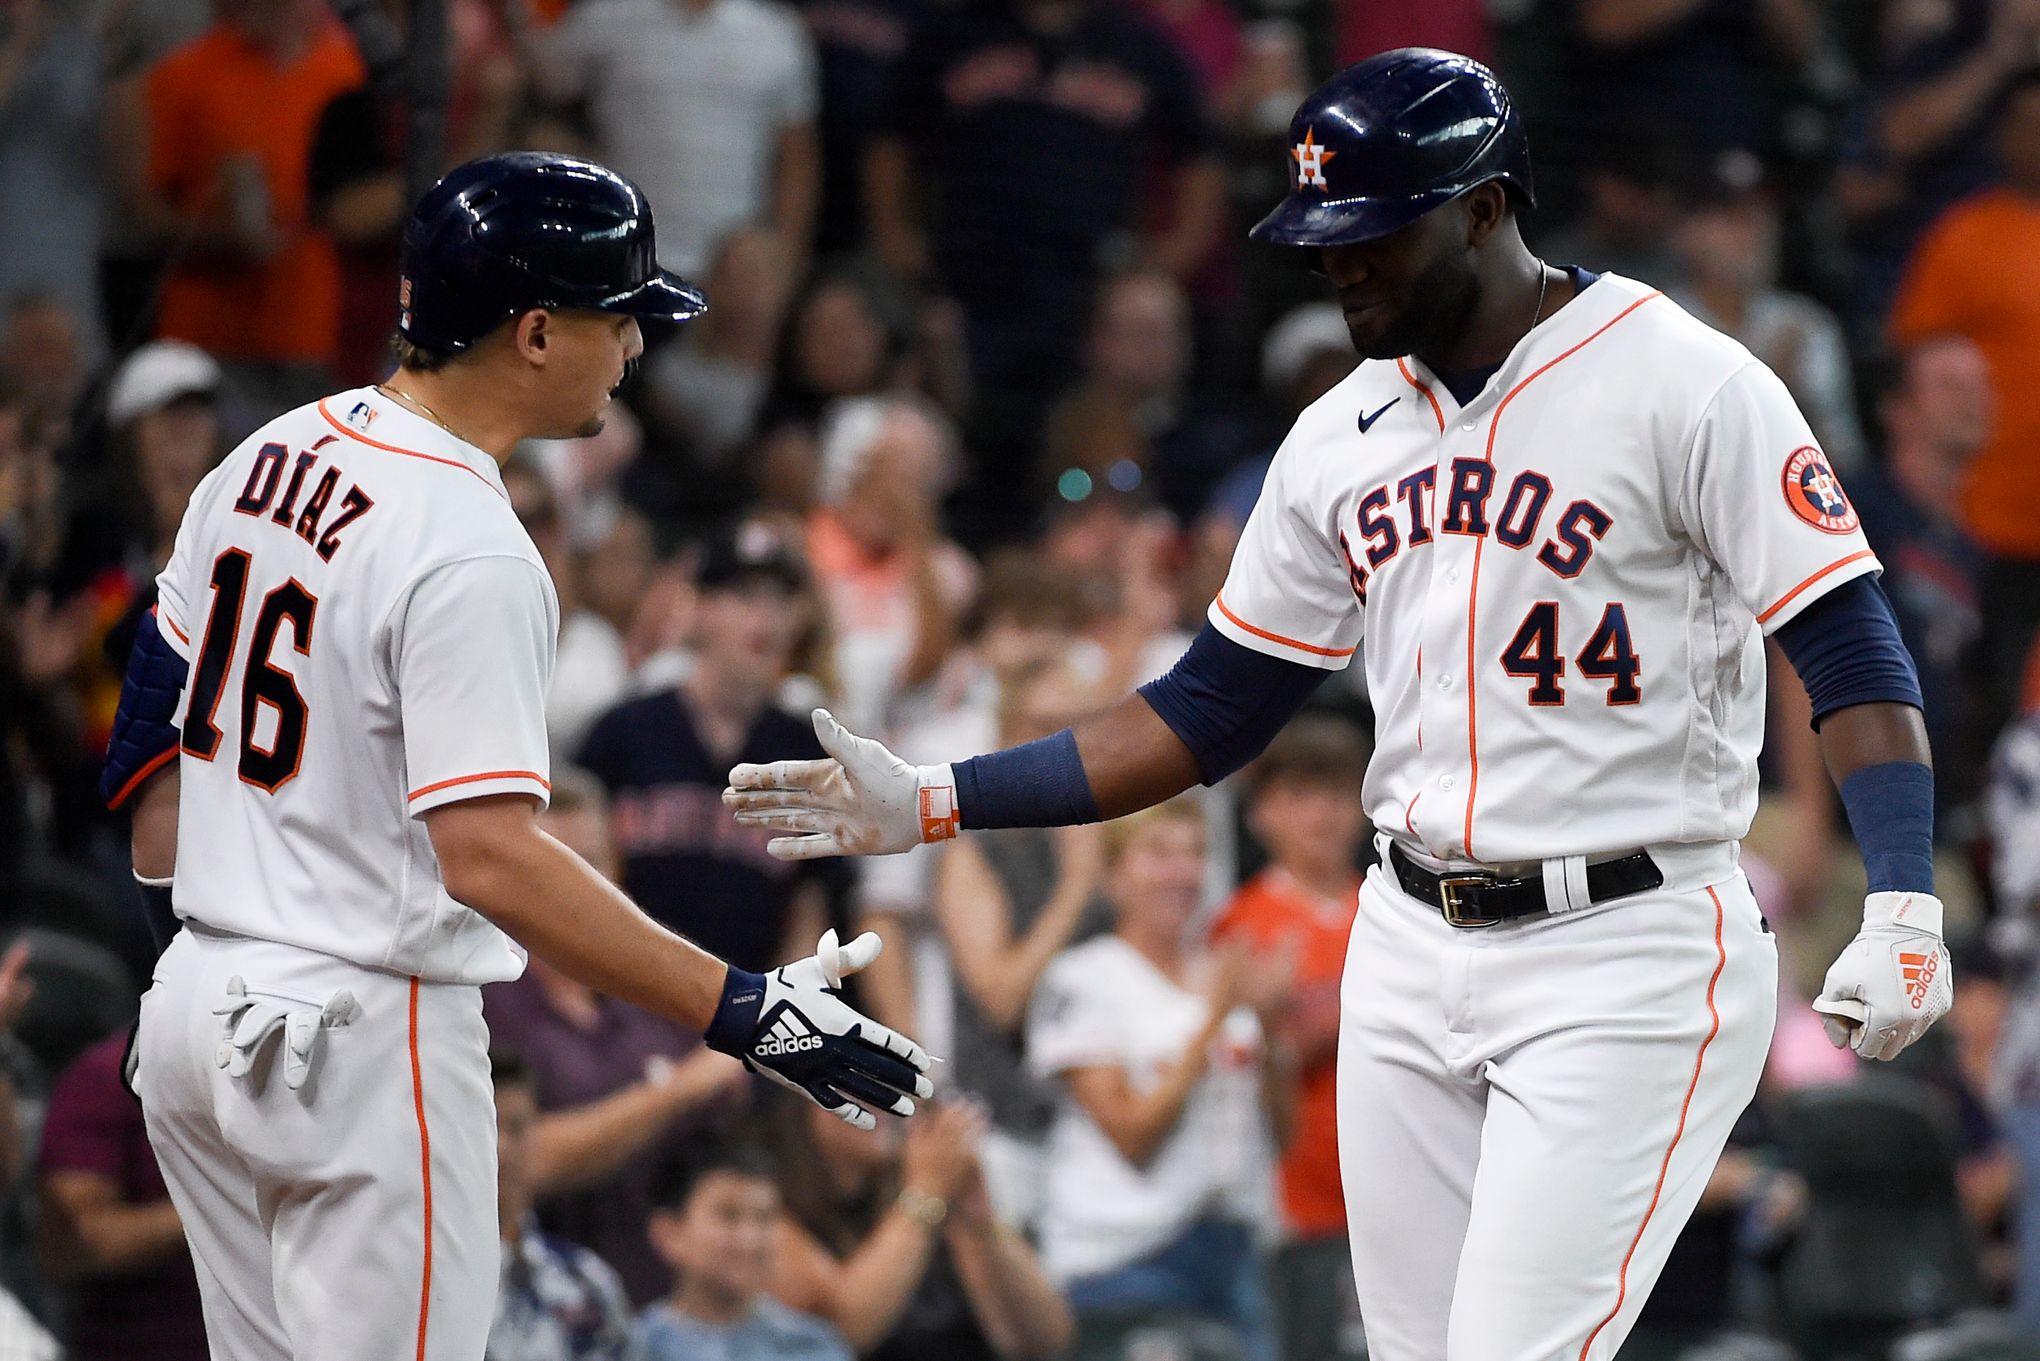 Houston Astros: Why Yordan Alvarez took himself out of game